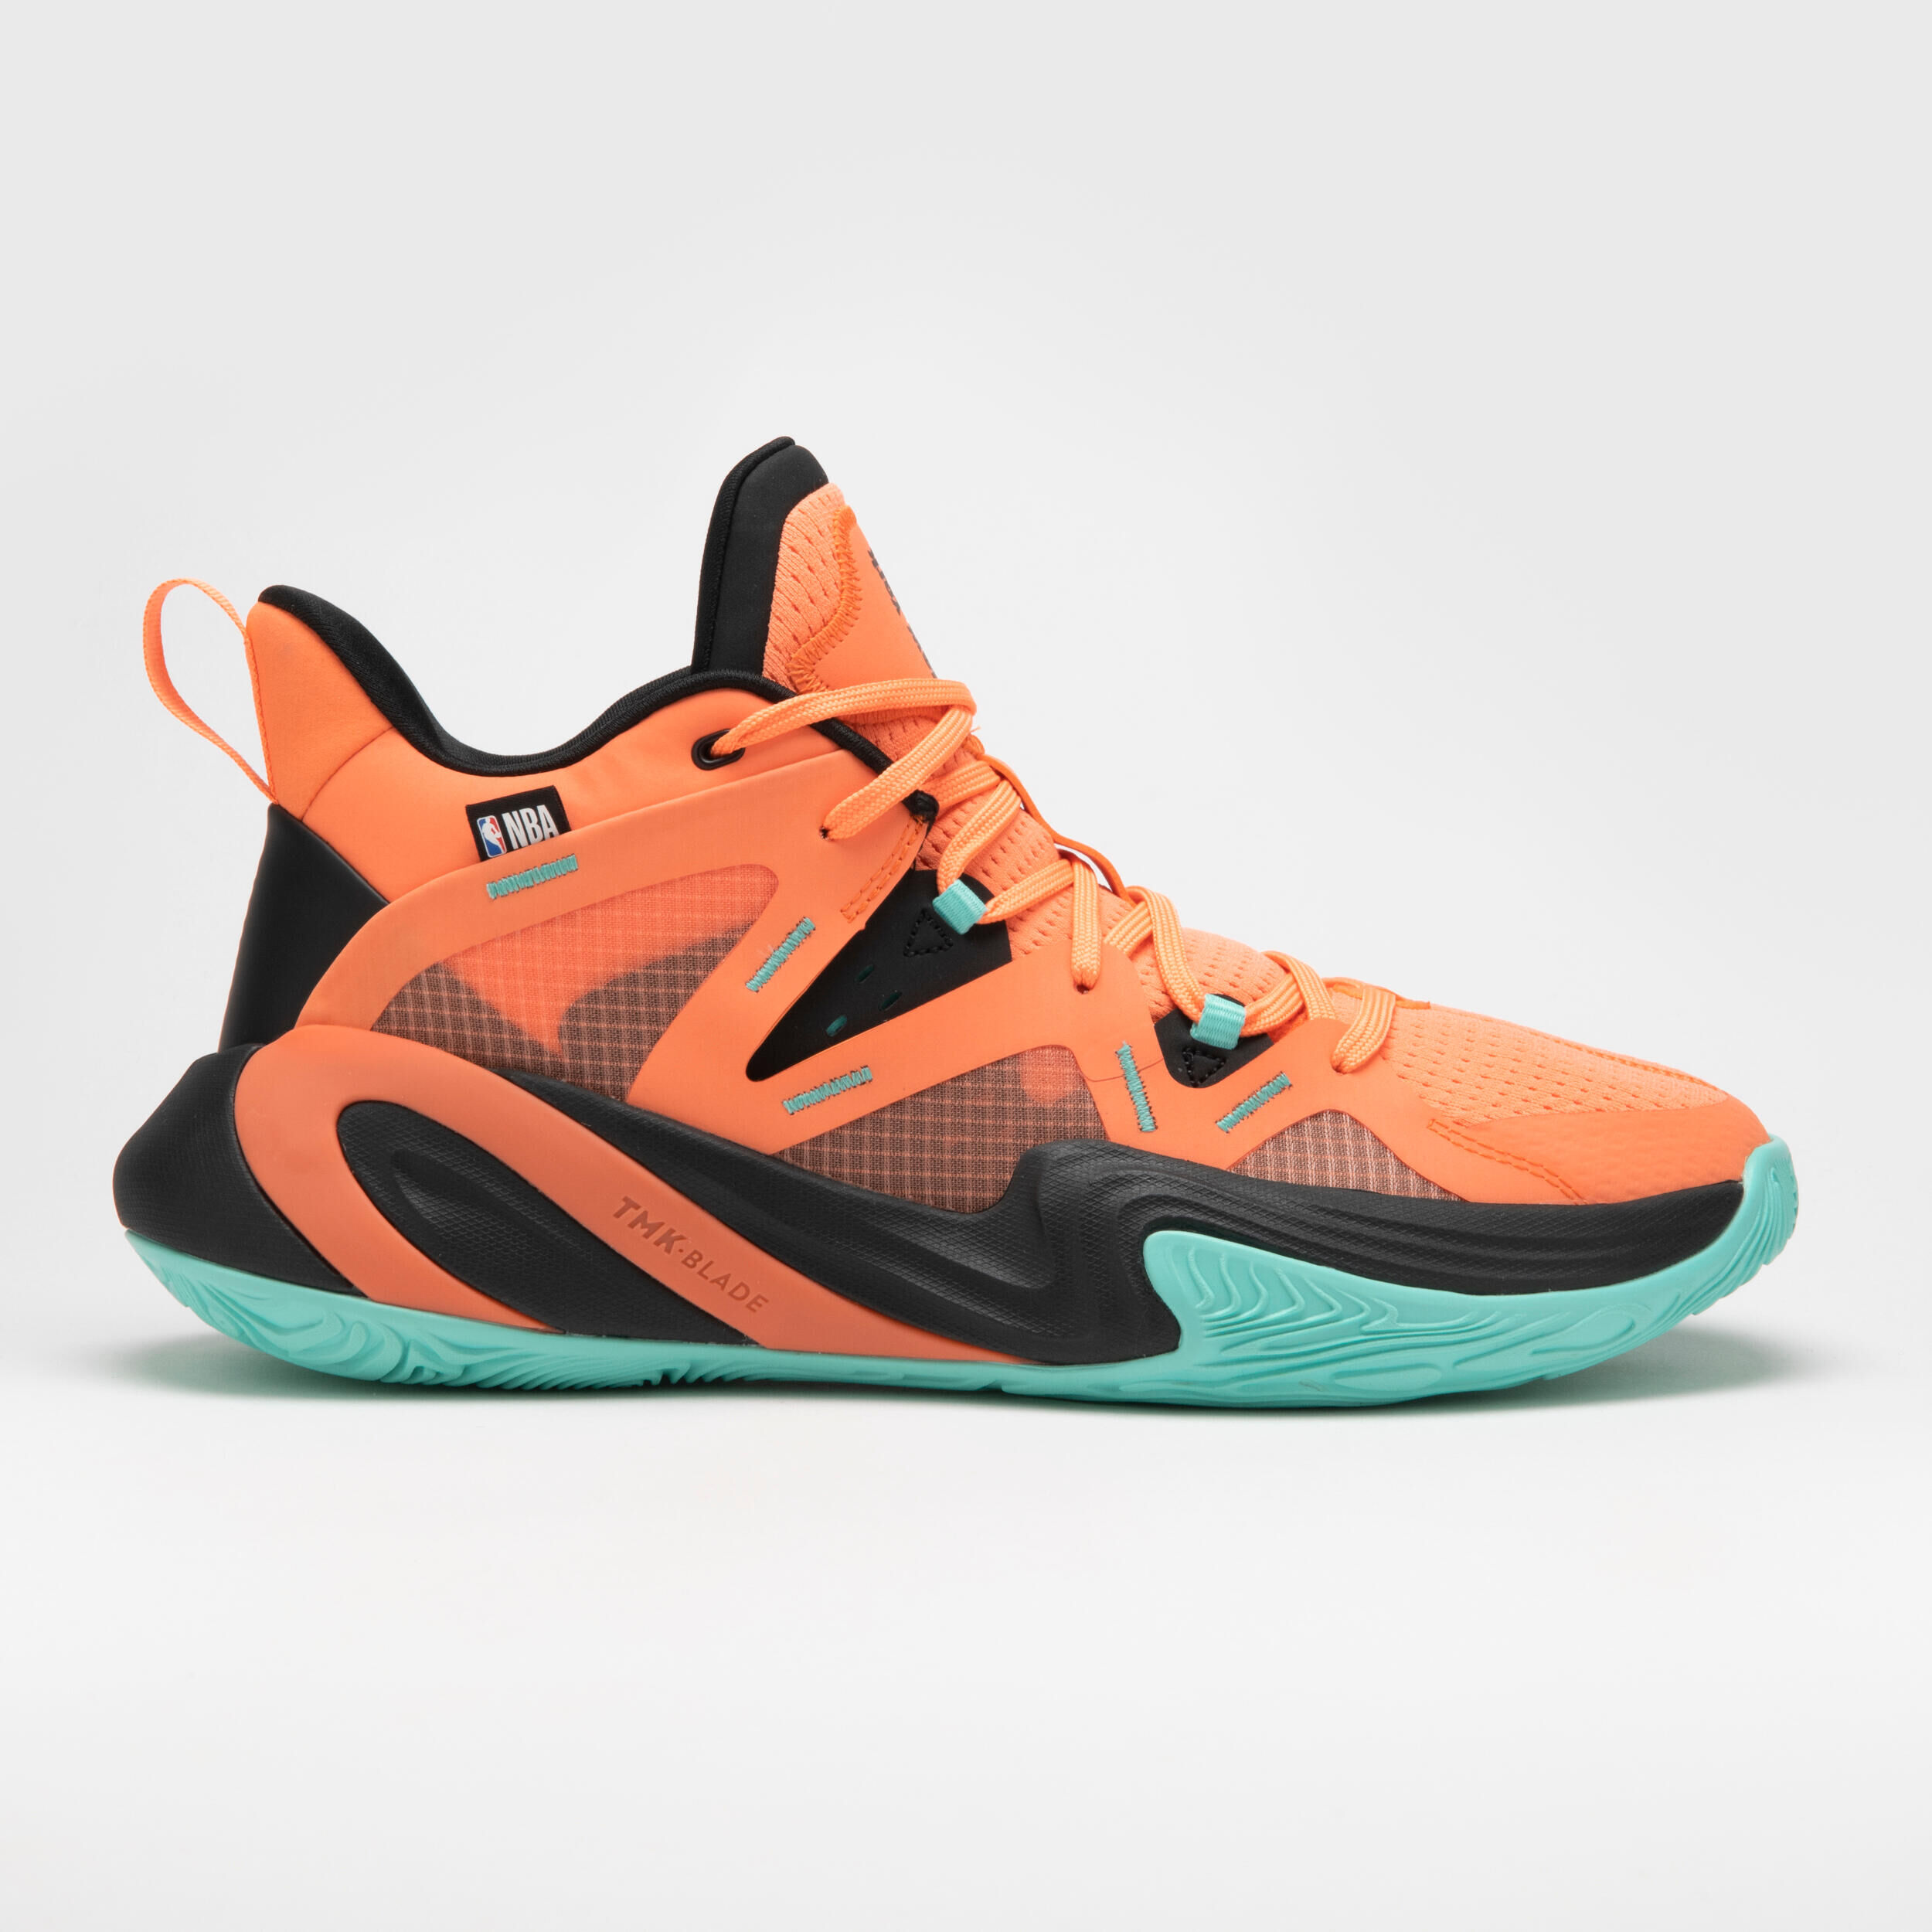 TARMAK Men's/Women's Basketball Shoes 900 NBA MID-3 - New York Knicks/Orange